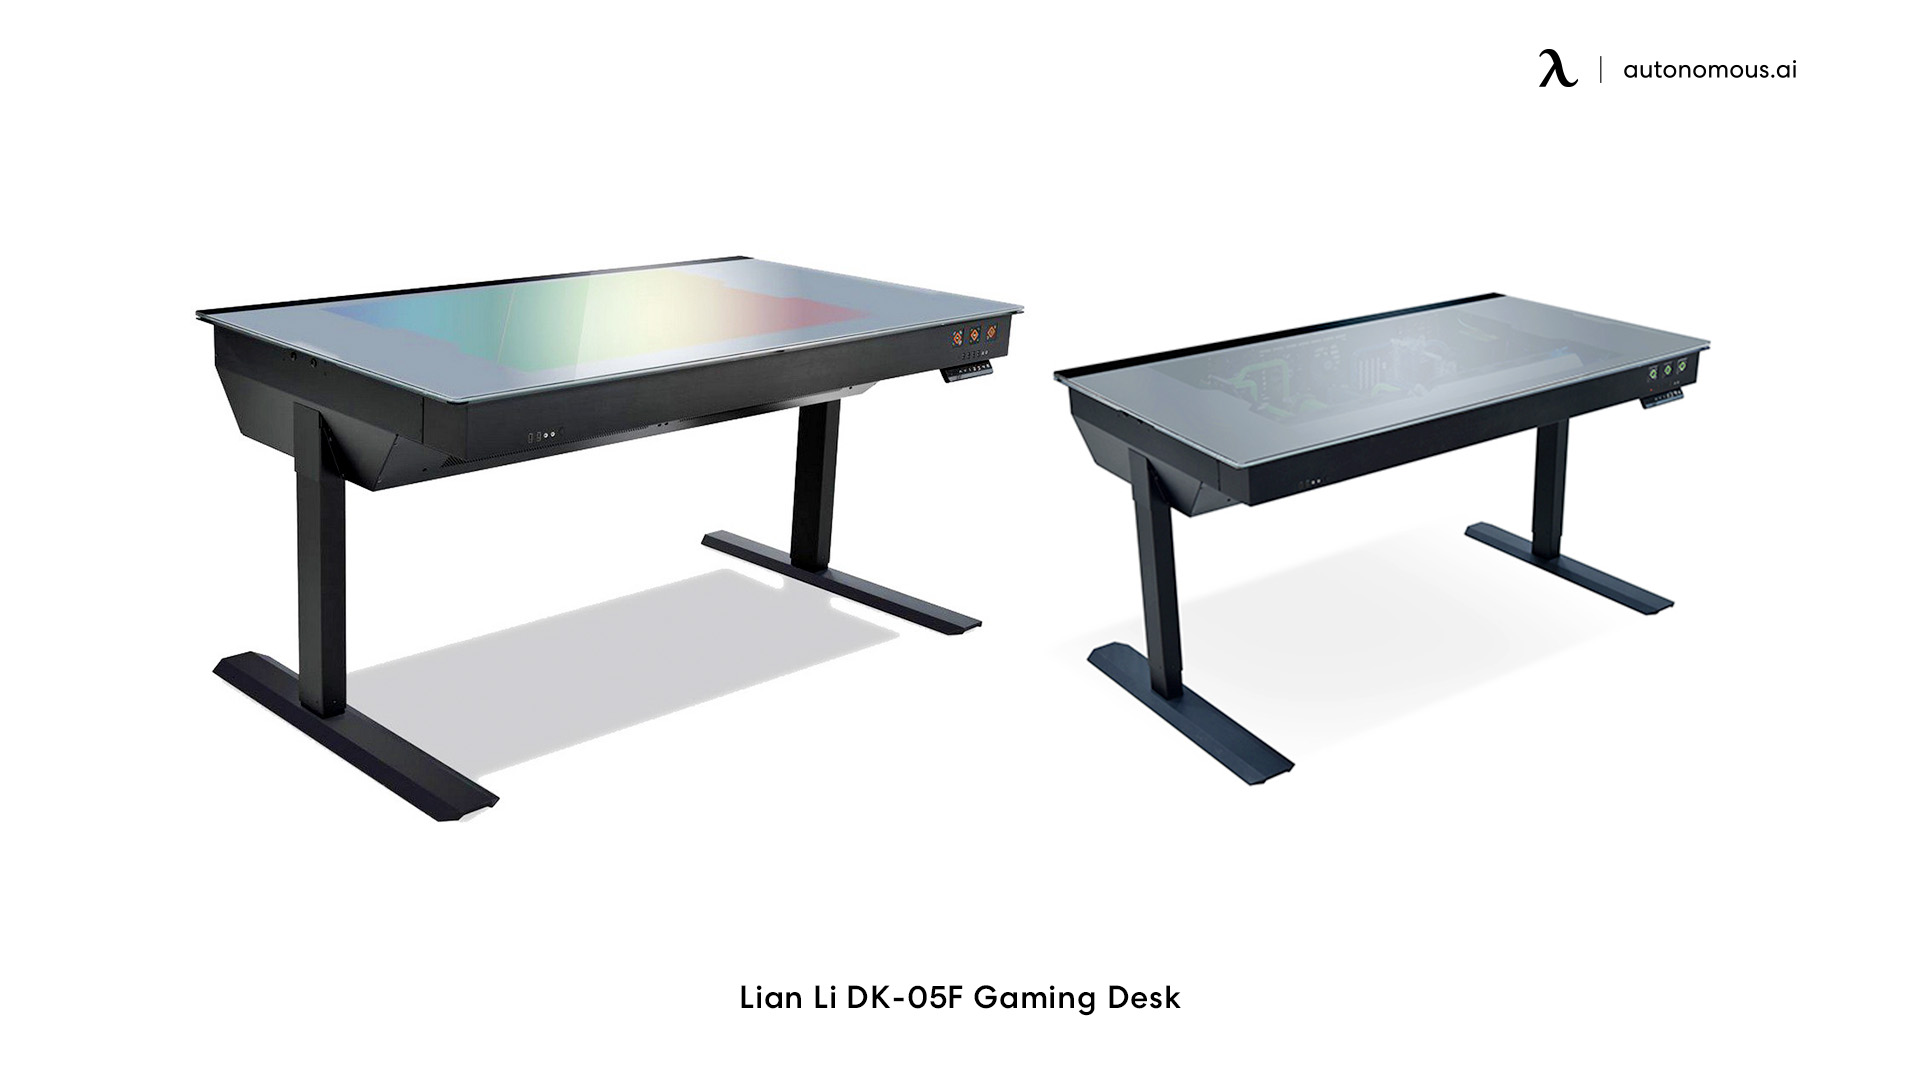 Lian Li DK-05F modern gaming desk